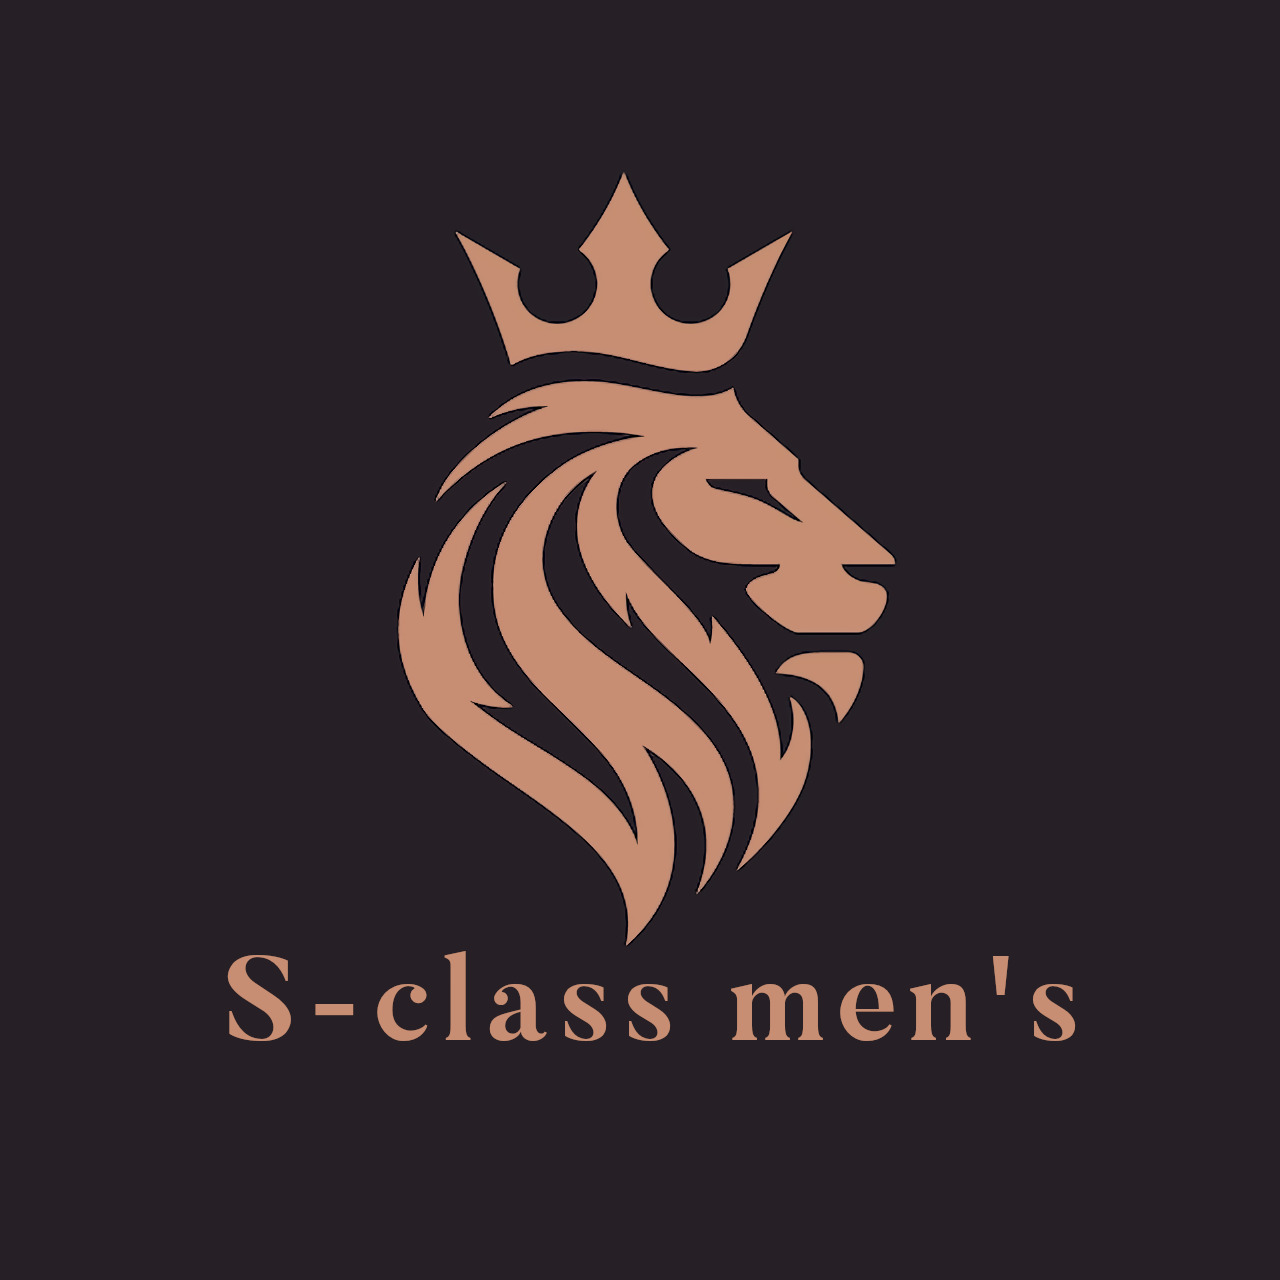 S-class men'sメンバーシップのお知らせ。